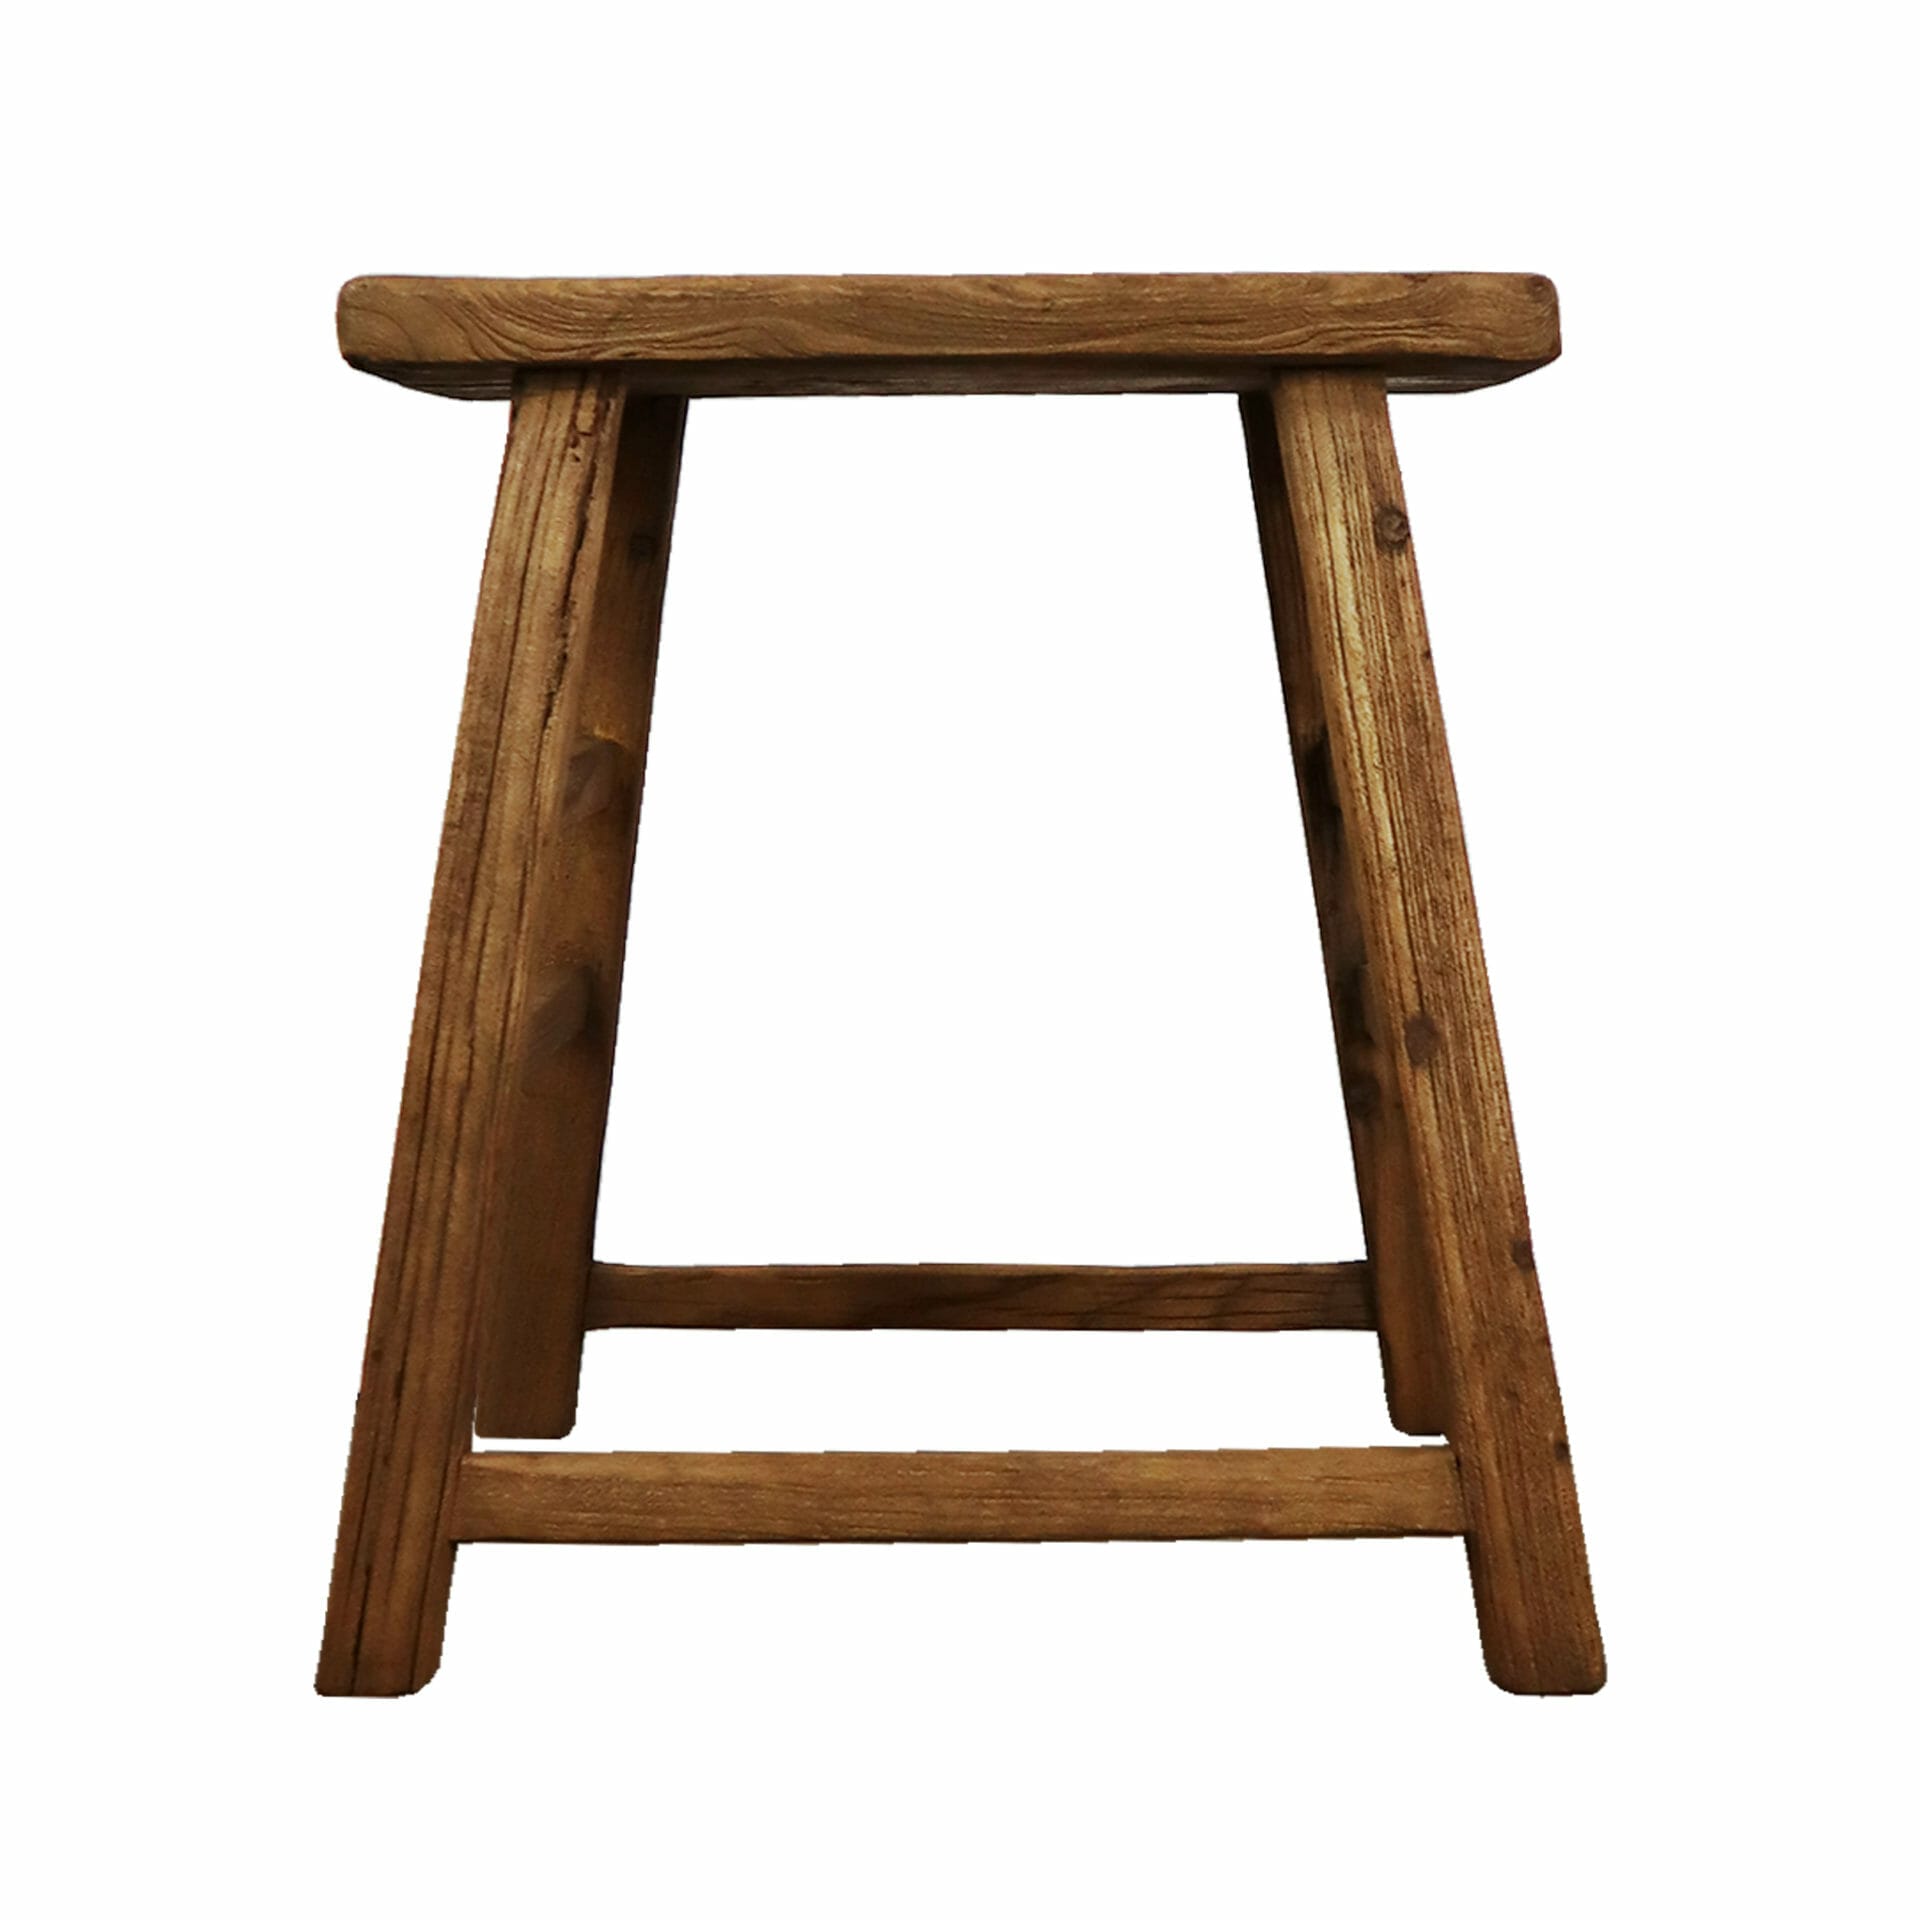 Rectangular elm wood handmade stool medium oak finish rustic furniture